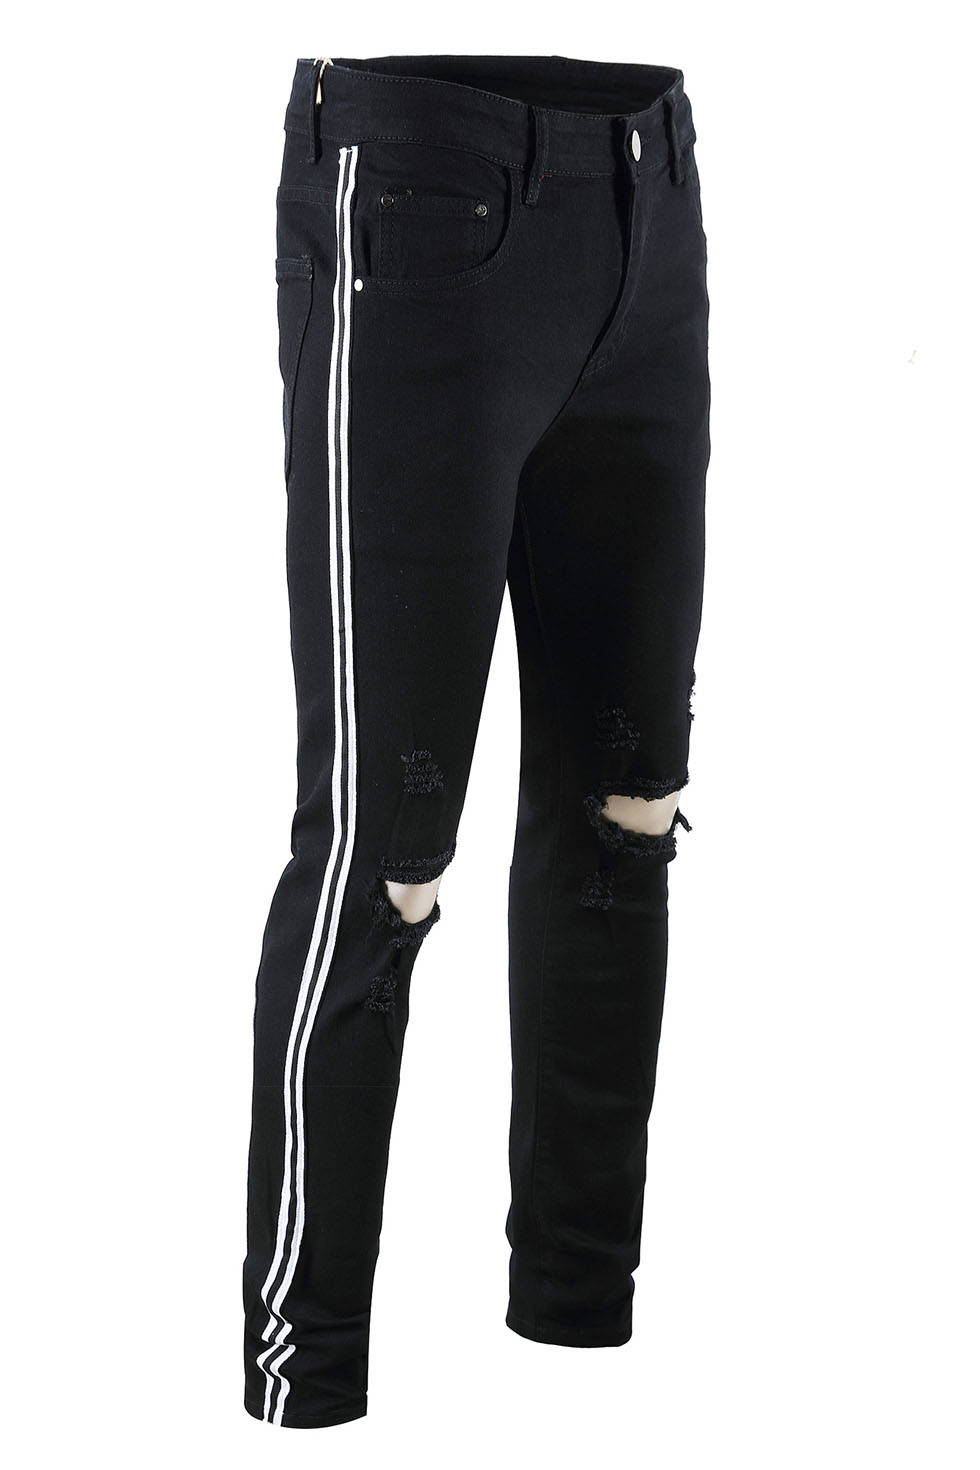 black and white striped skinny jeans mens